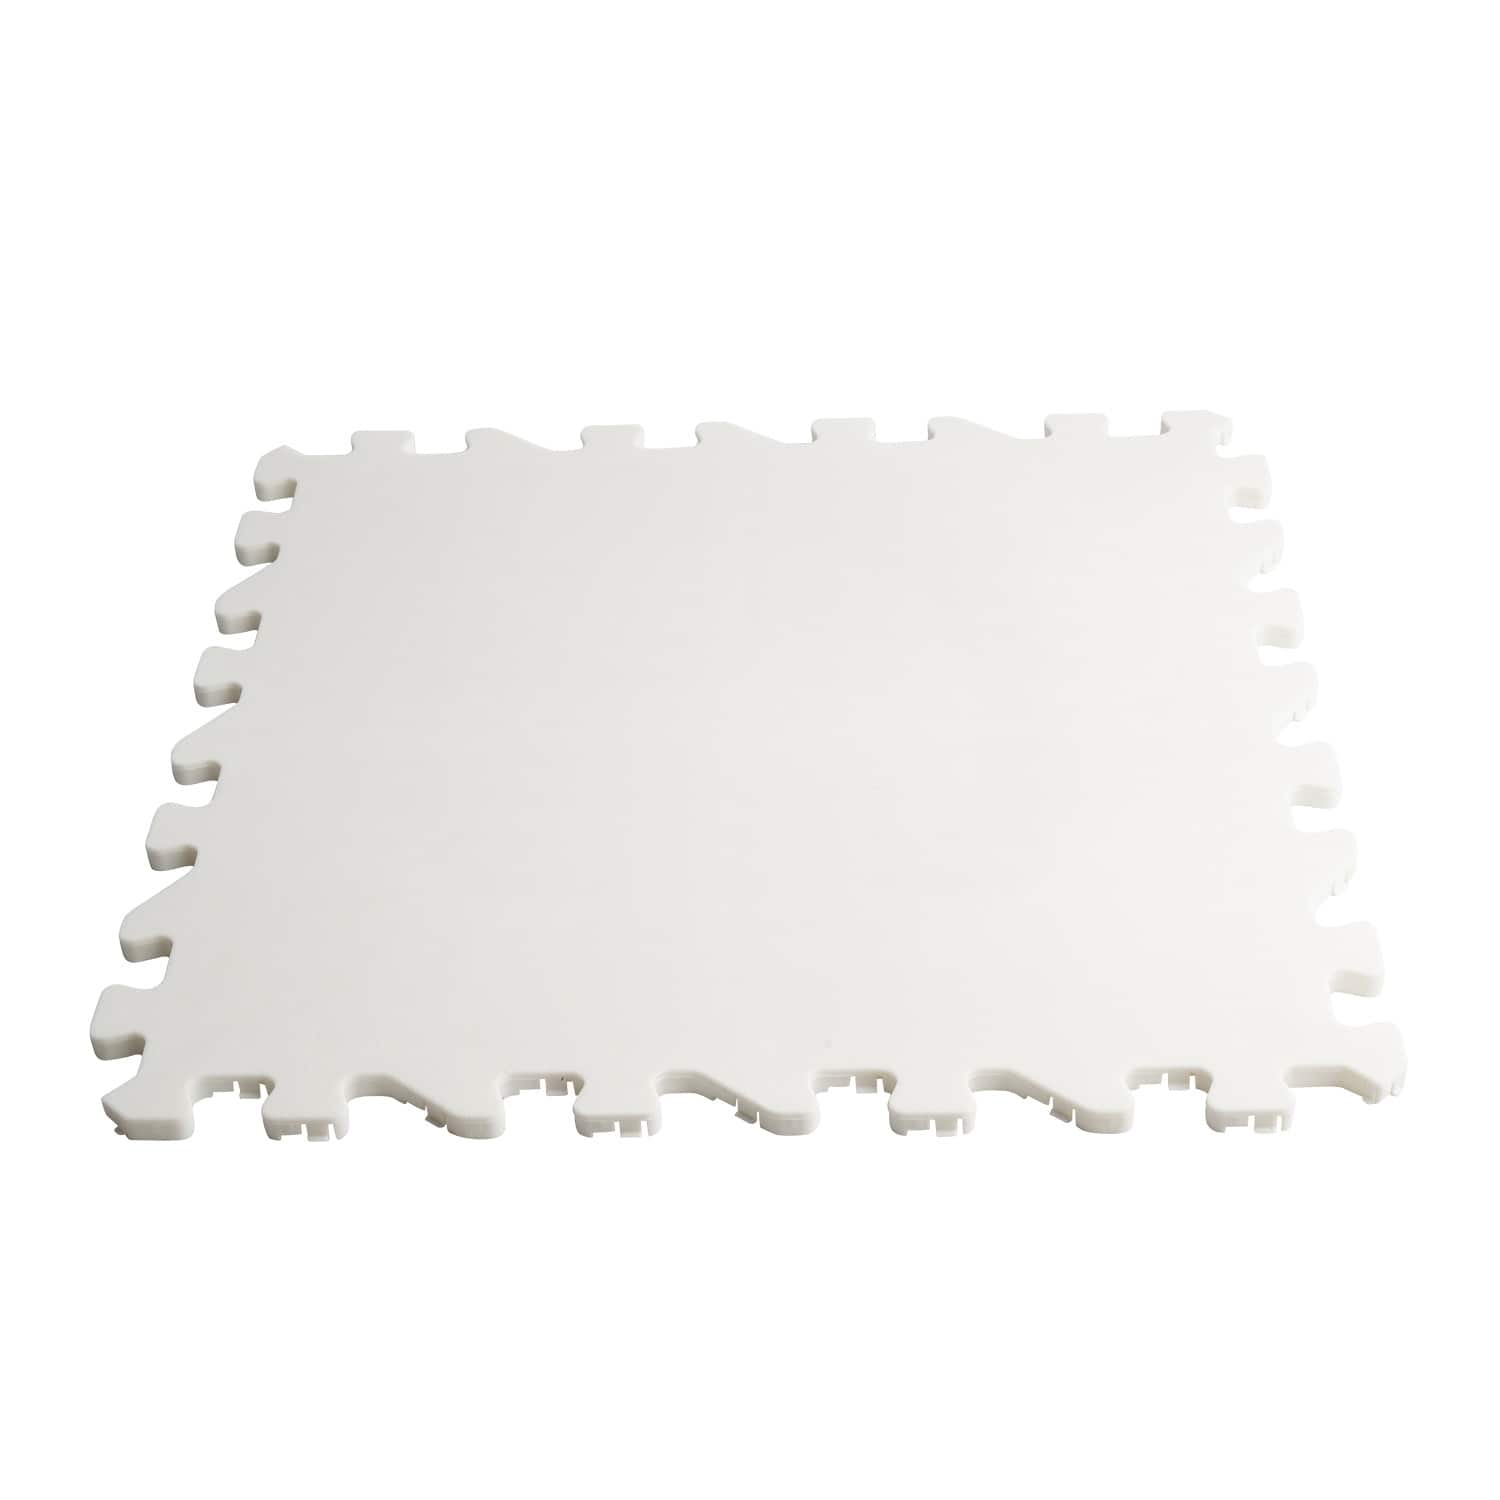 Bauer Dryland Synthetic Ice Tiles - 25er Pack 46x46 cm/Tile